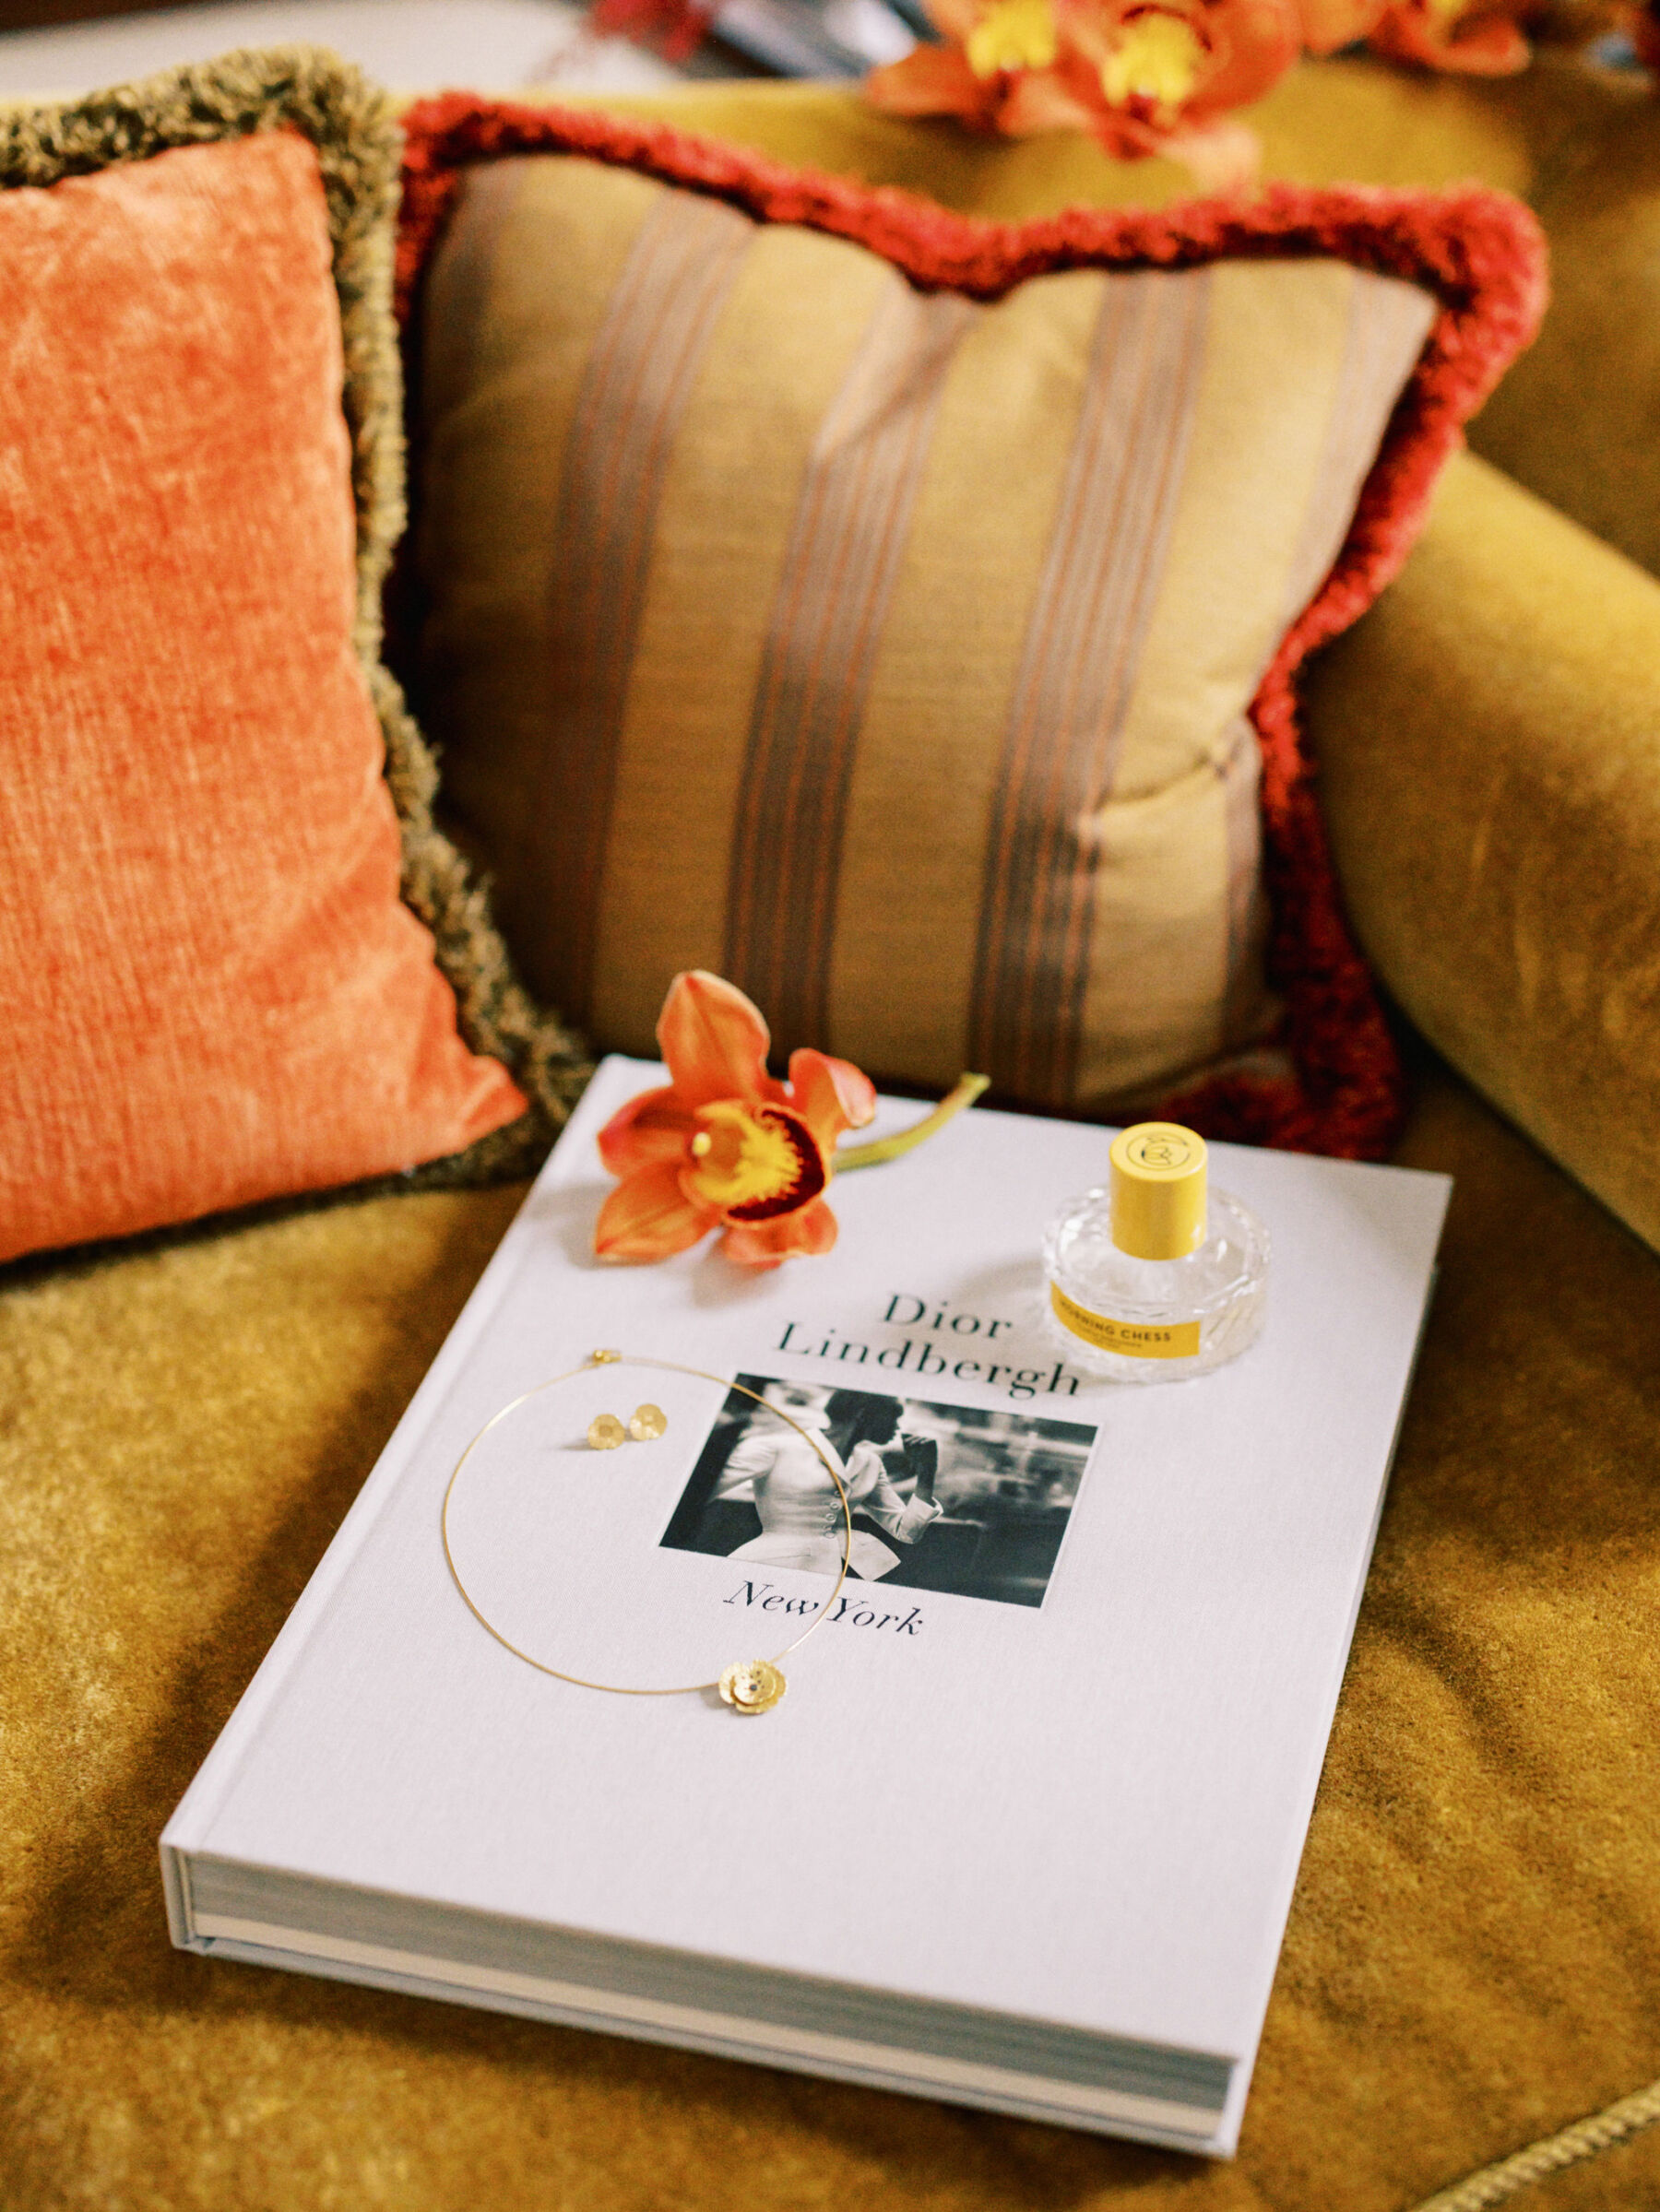 The Dior Lindbergh book. Kernwell Photography.